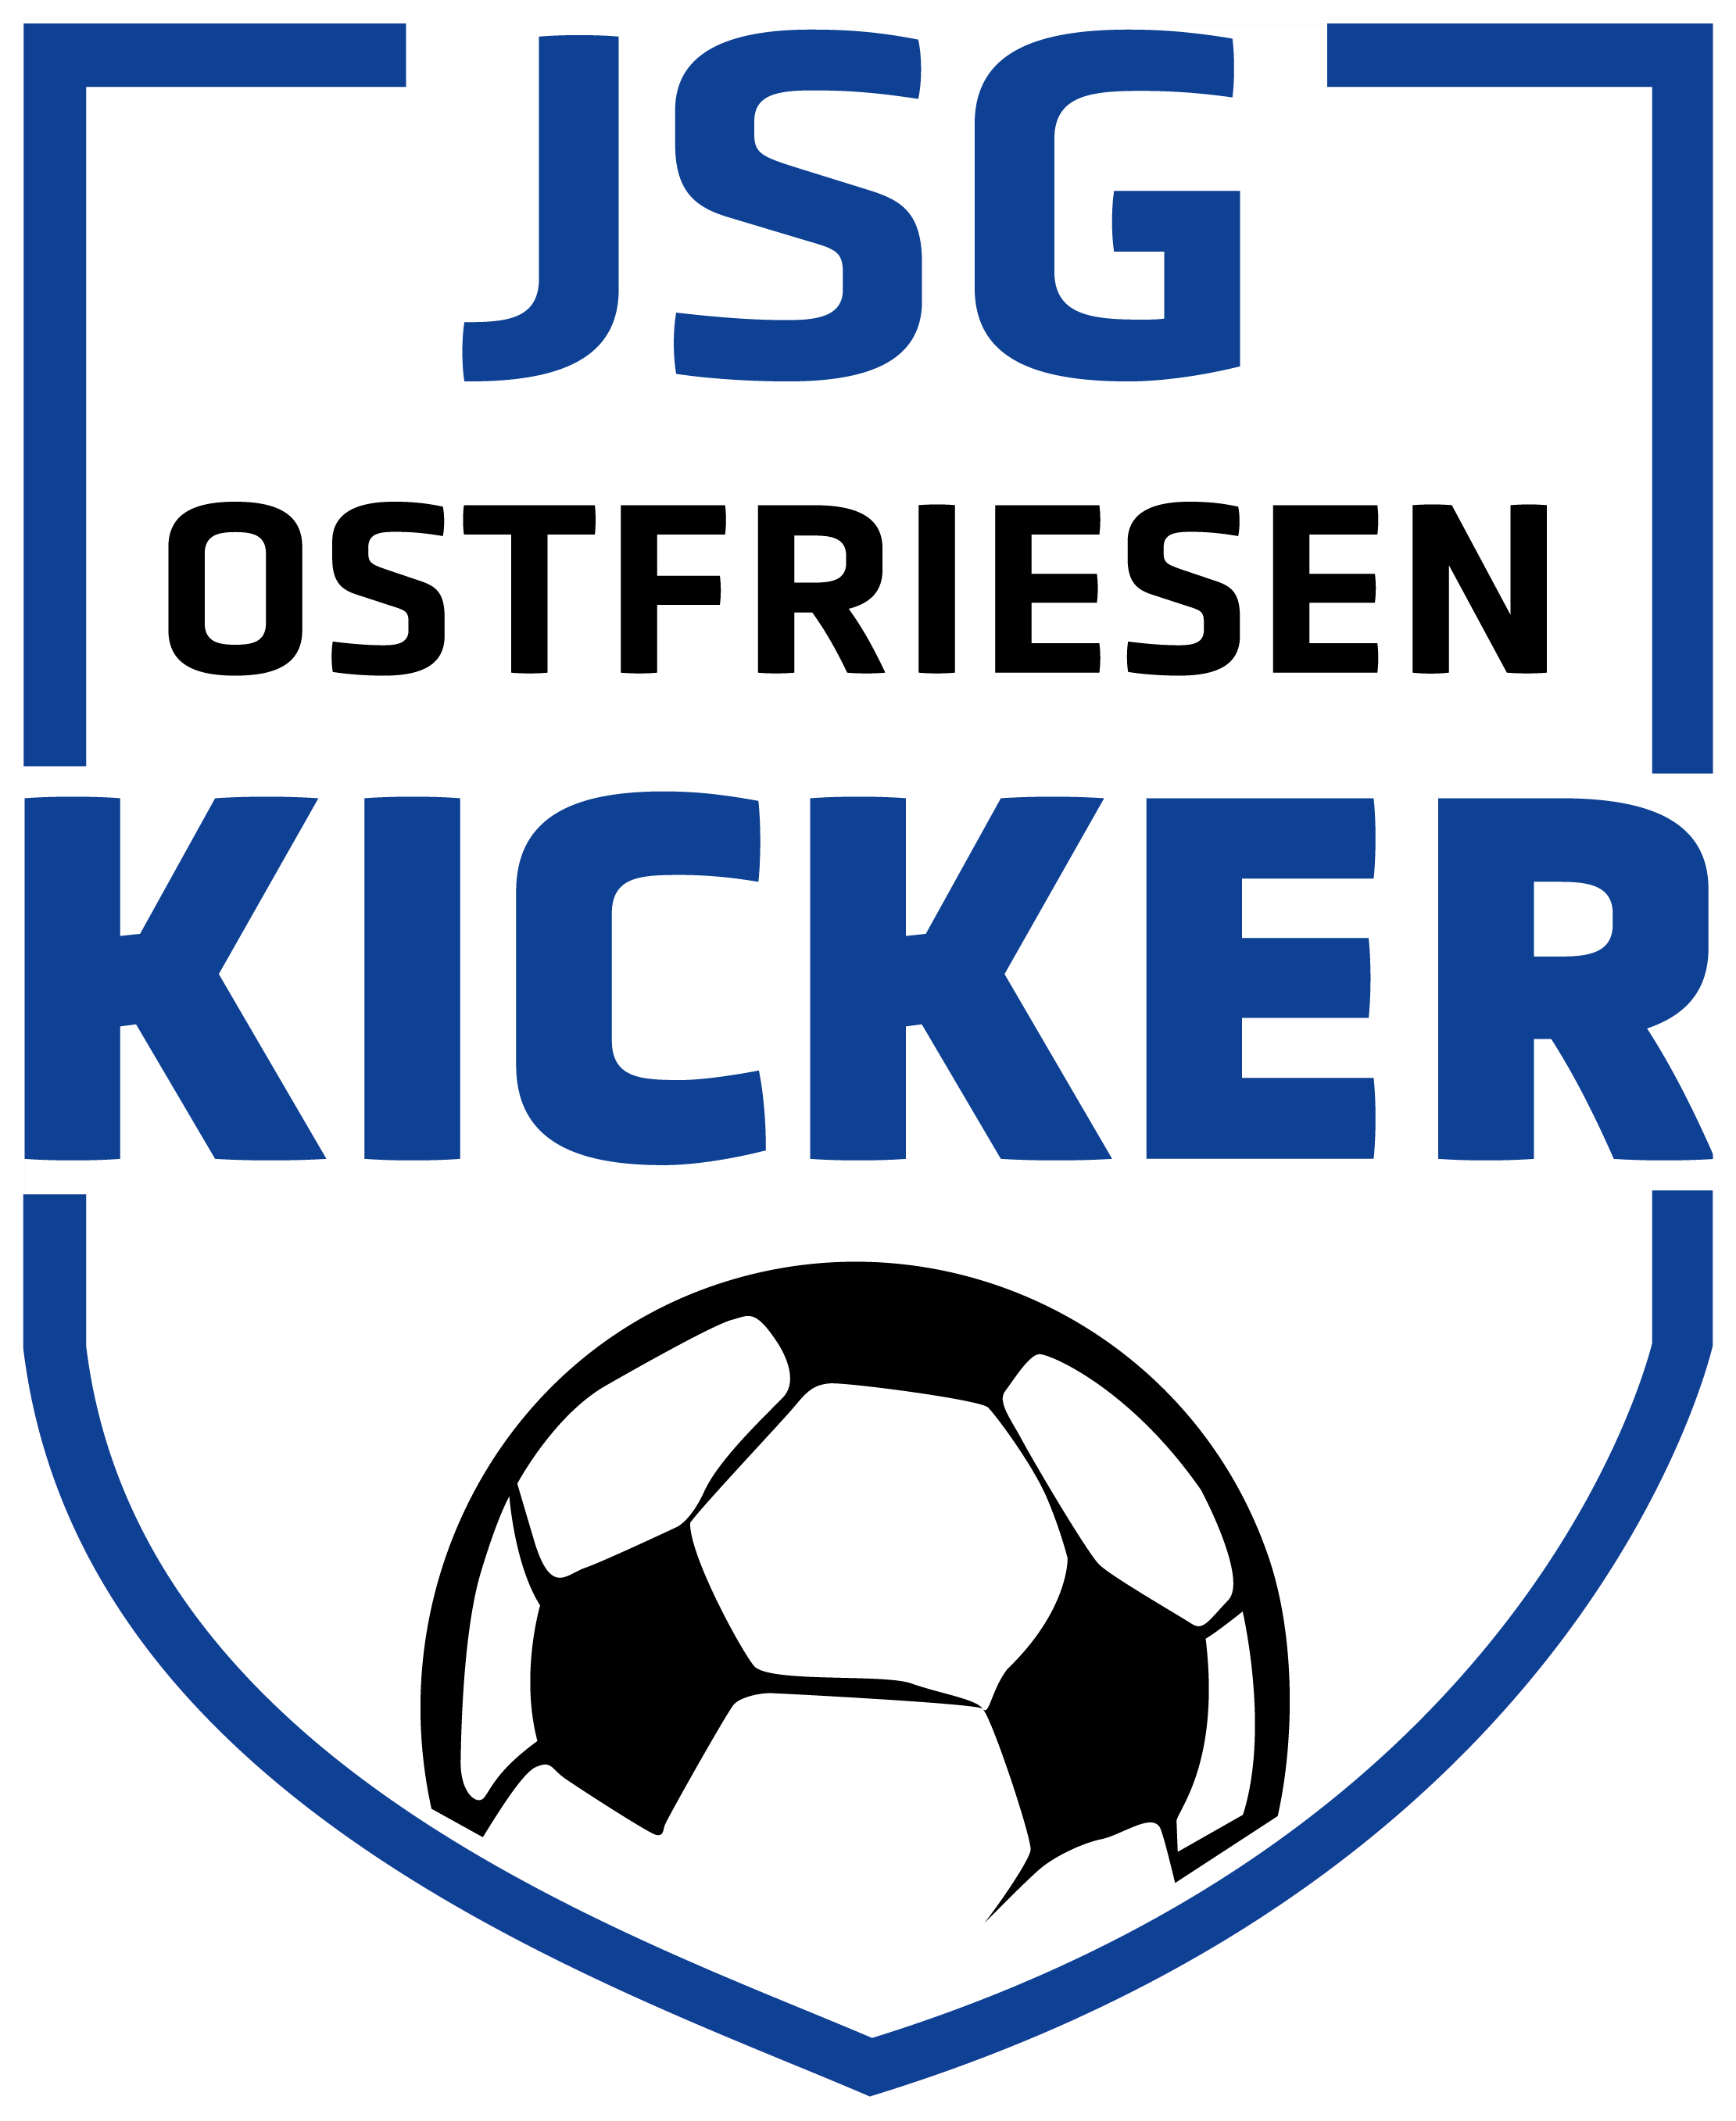 JSG_Ostfriesenkicker_Logo_blau_vektor_weißer_rahmen_v2